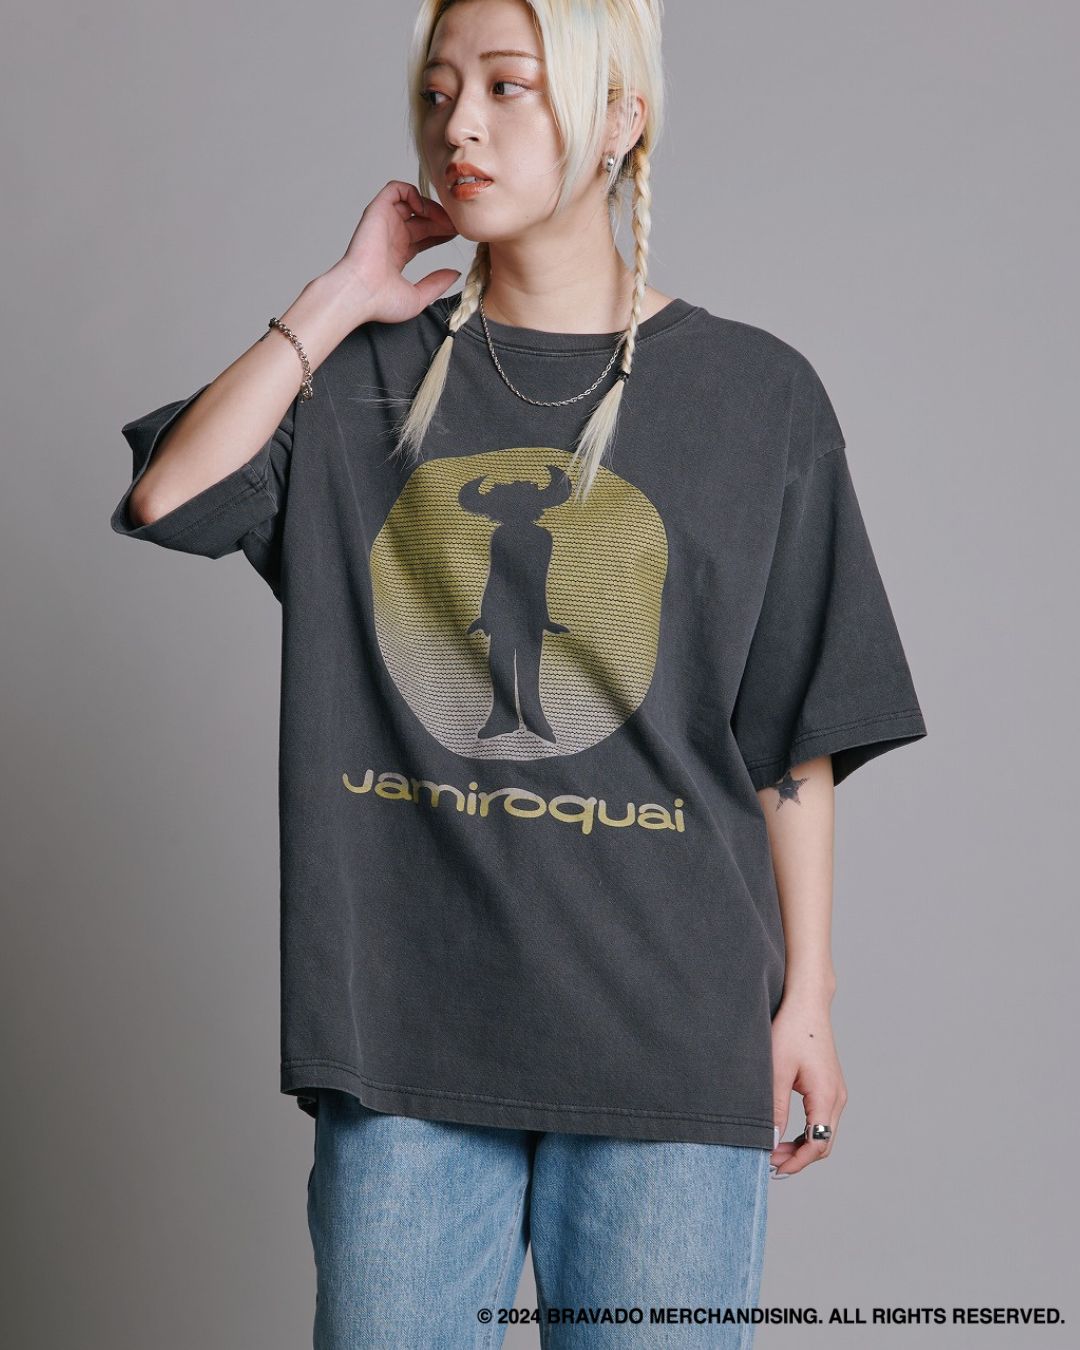 【Jamiroquai】サークルロゴTシャツ